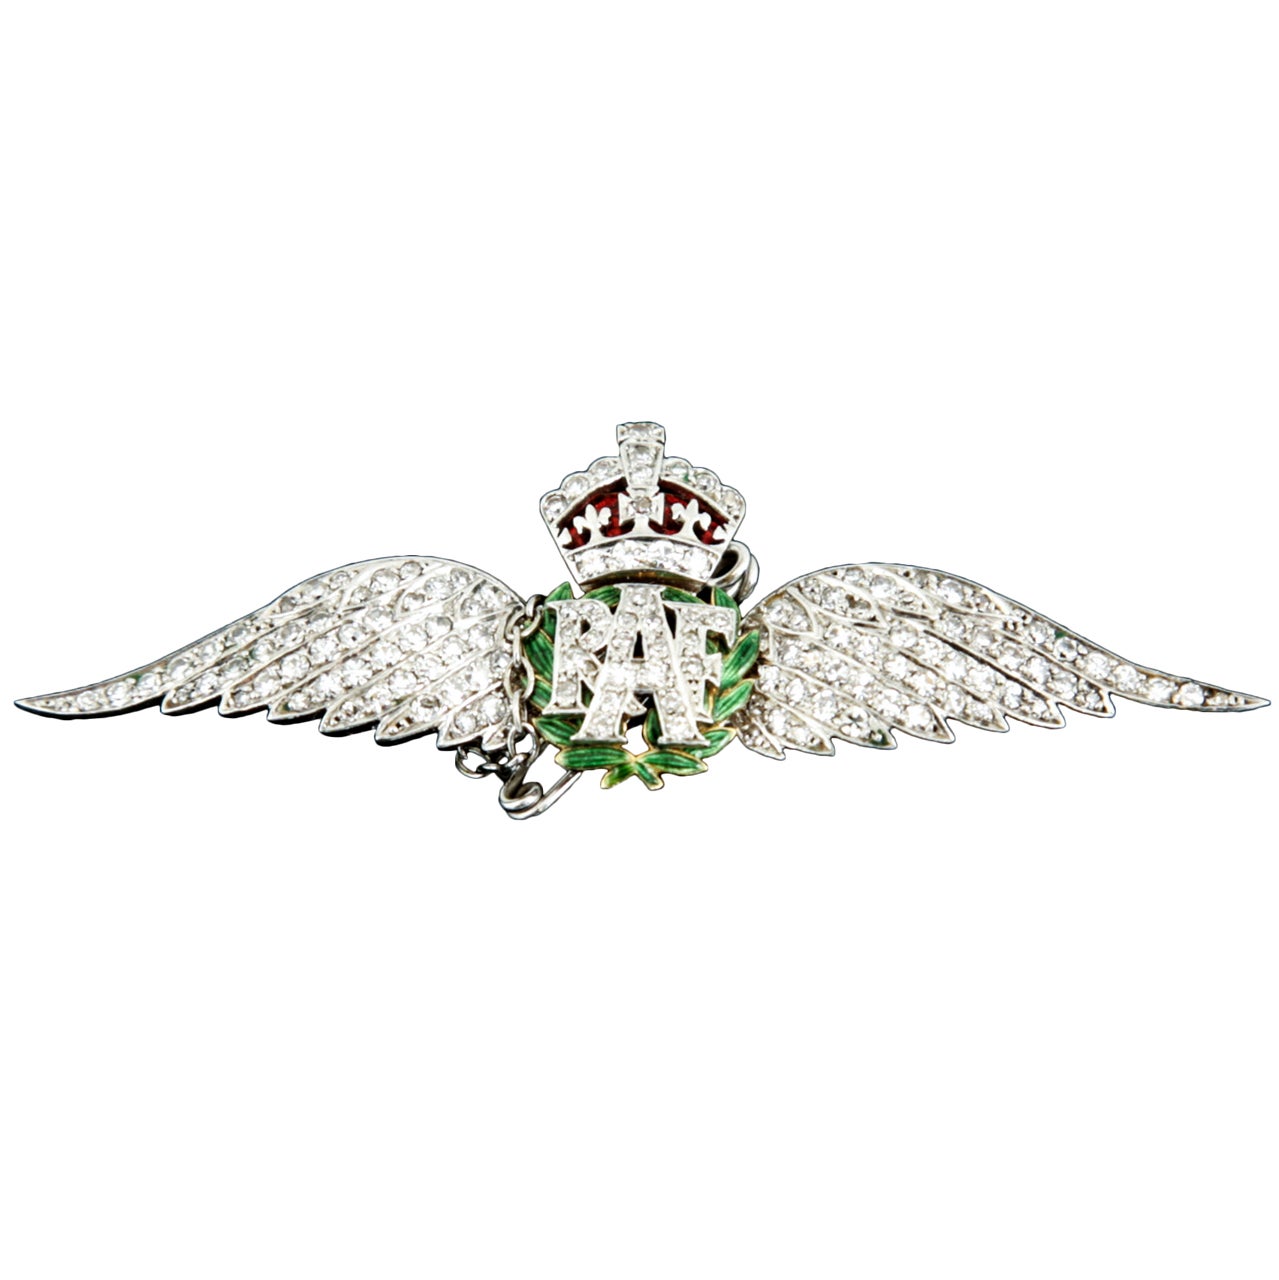 Cartier 1937 Royal Air Force Wings Diamond Pin